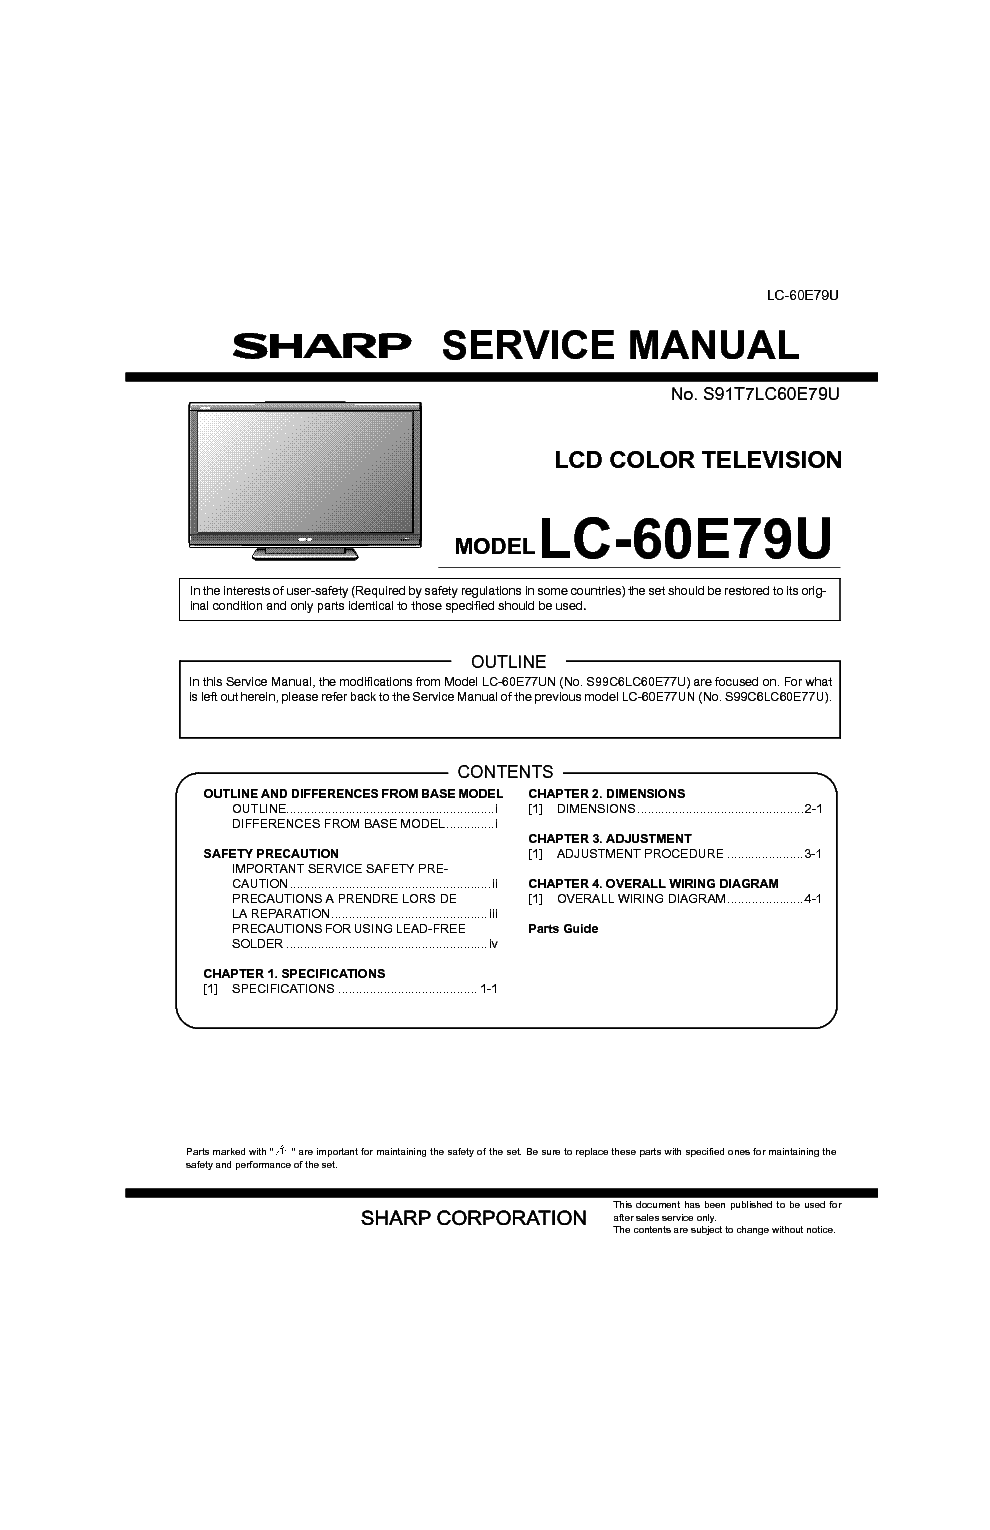 SHARP LC-60E79U service manual (1st page)